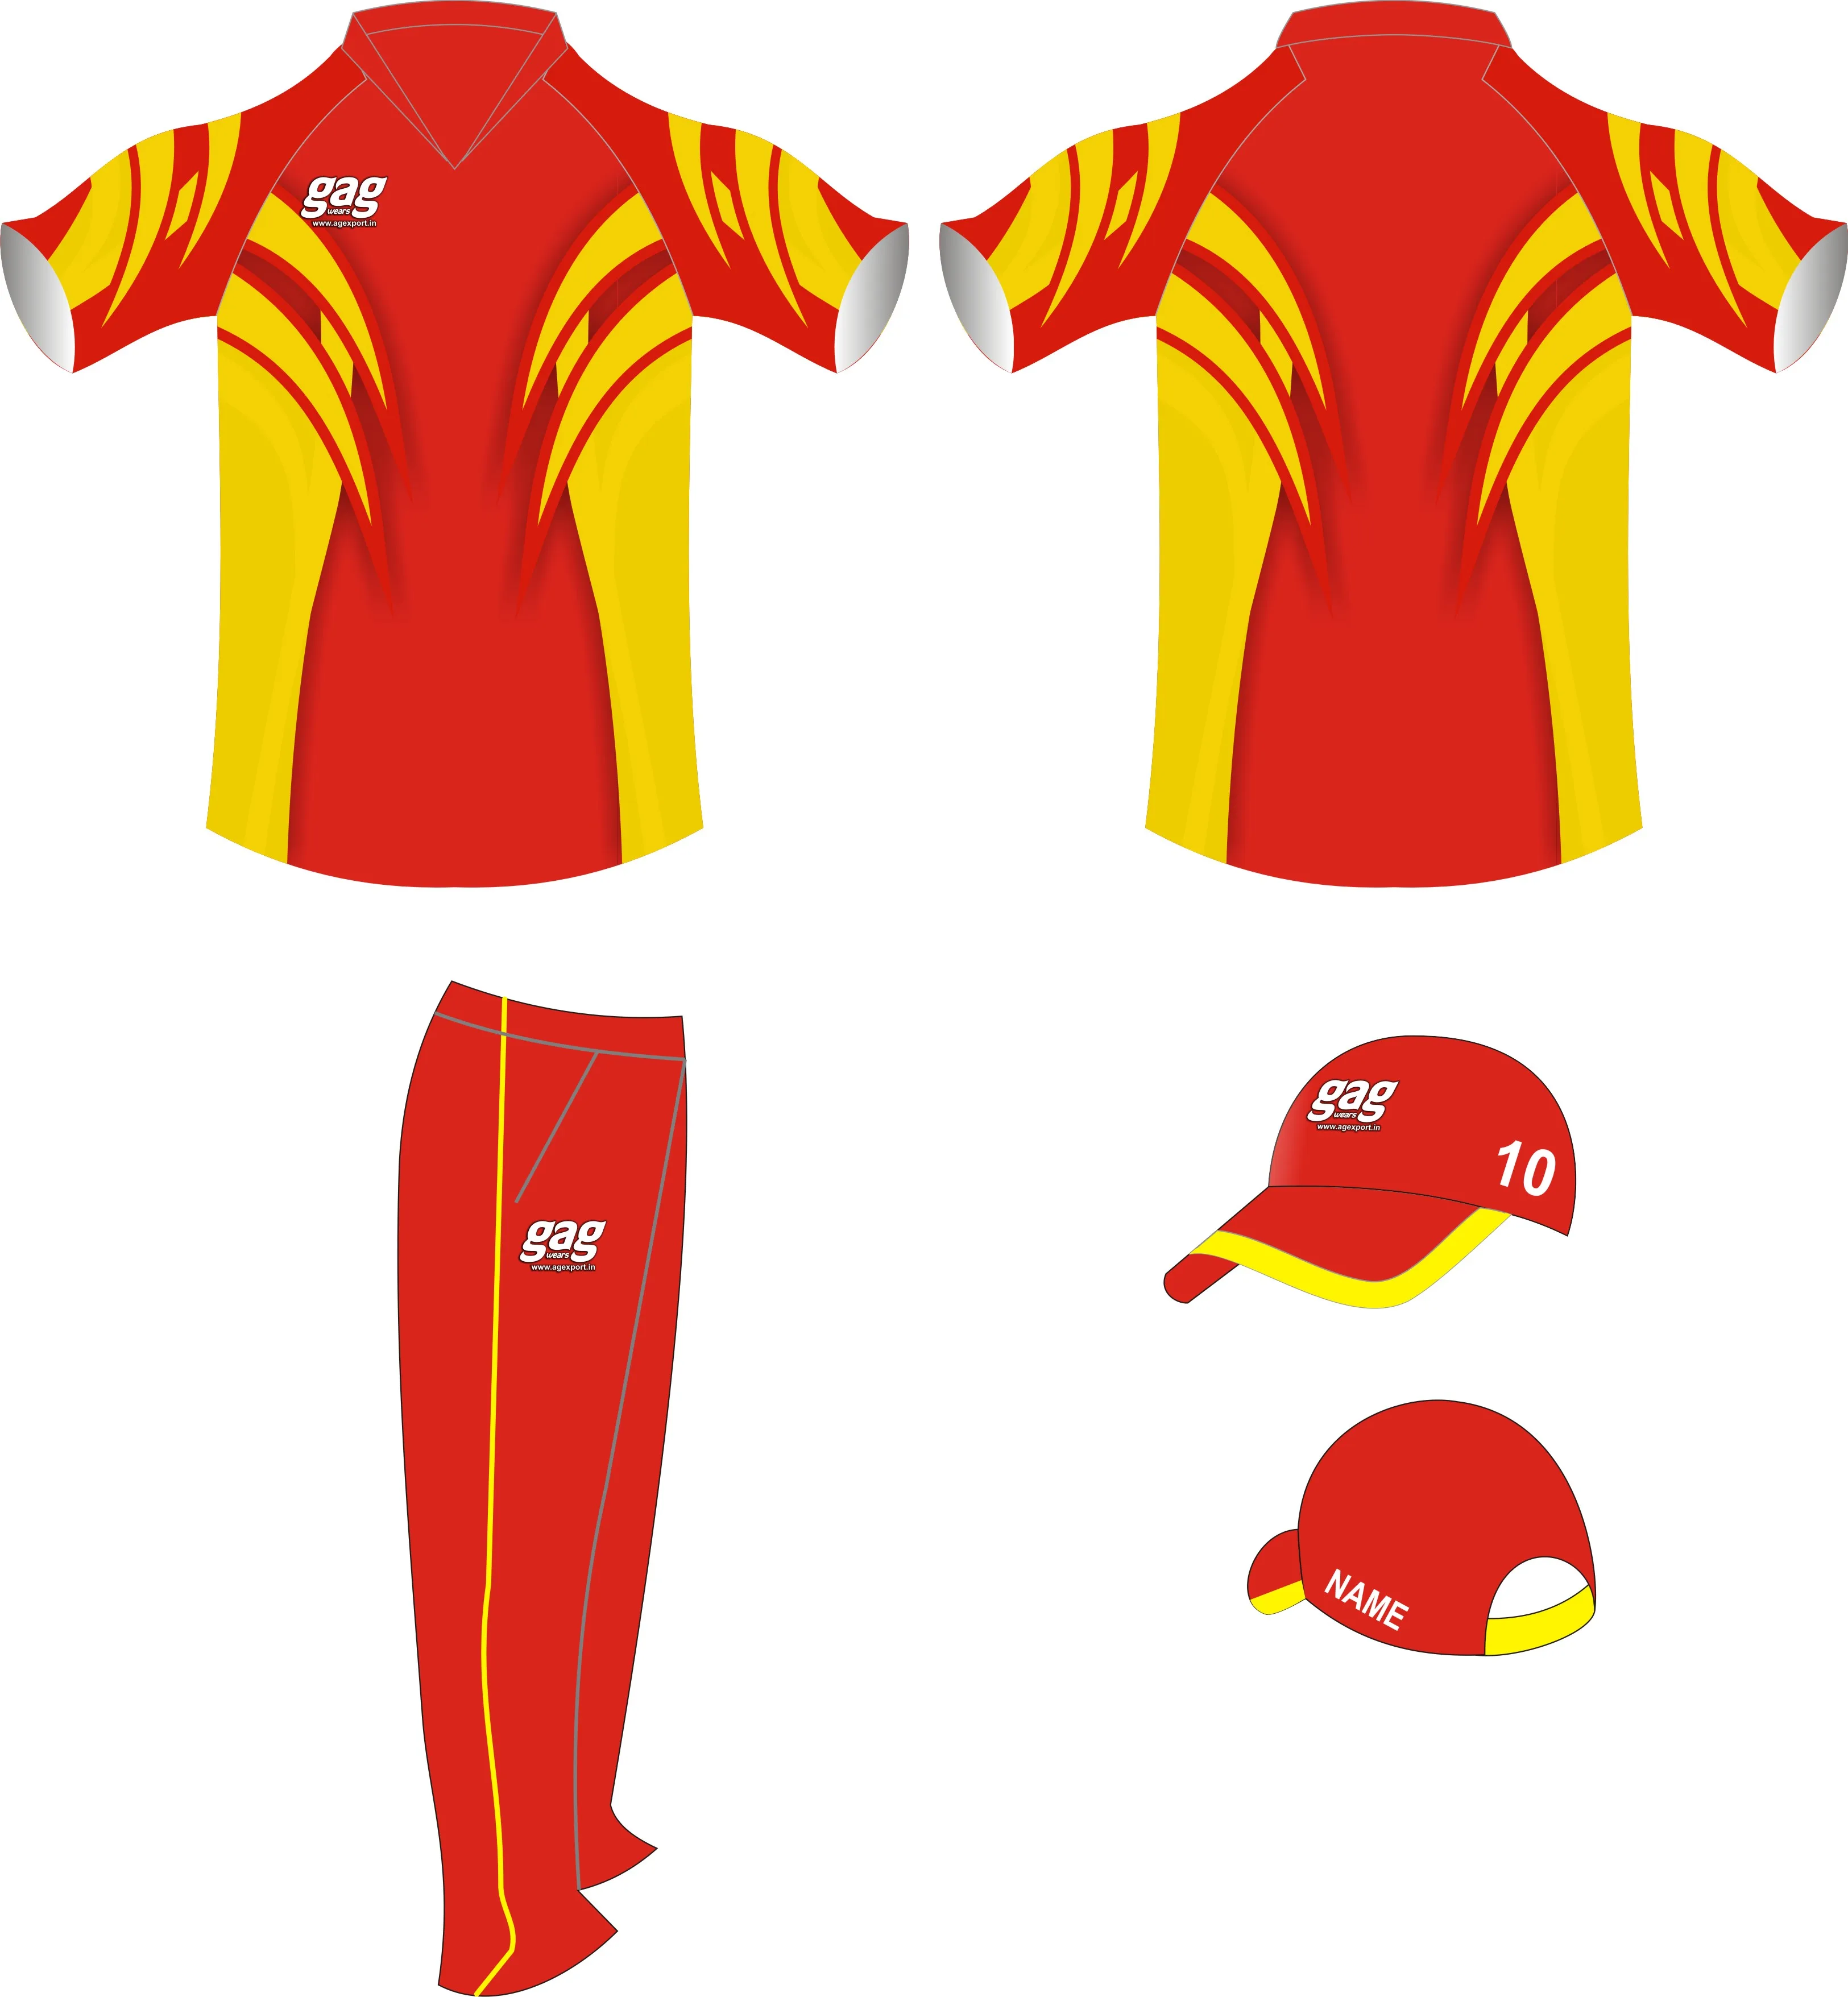 england cricket team t20 jersey